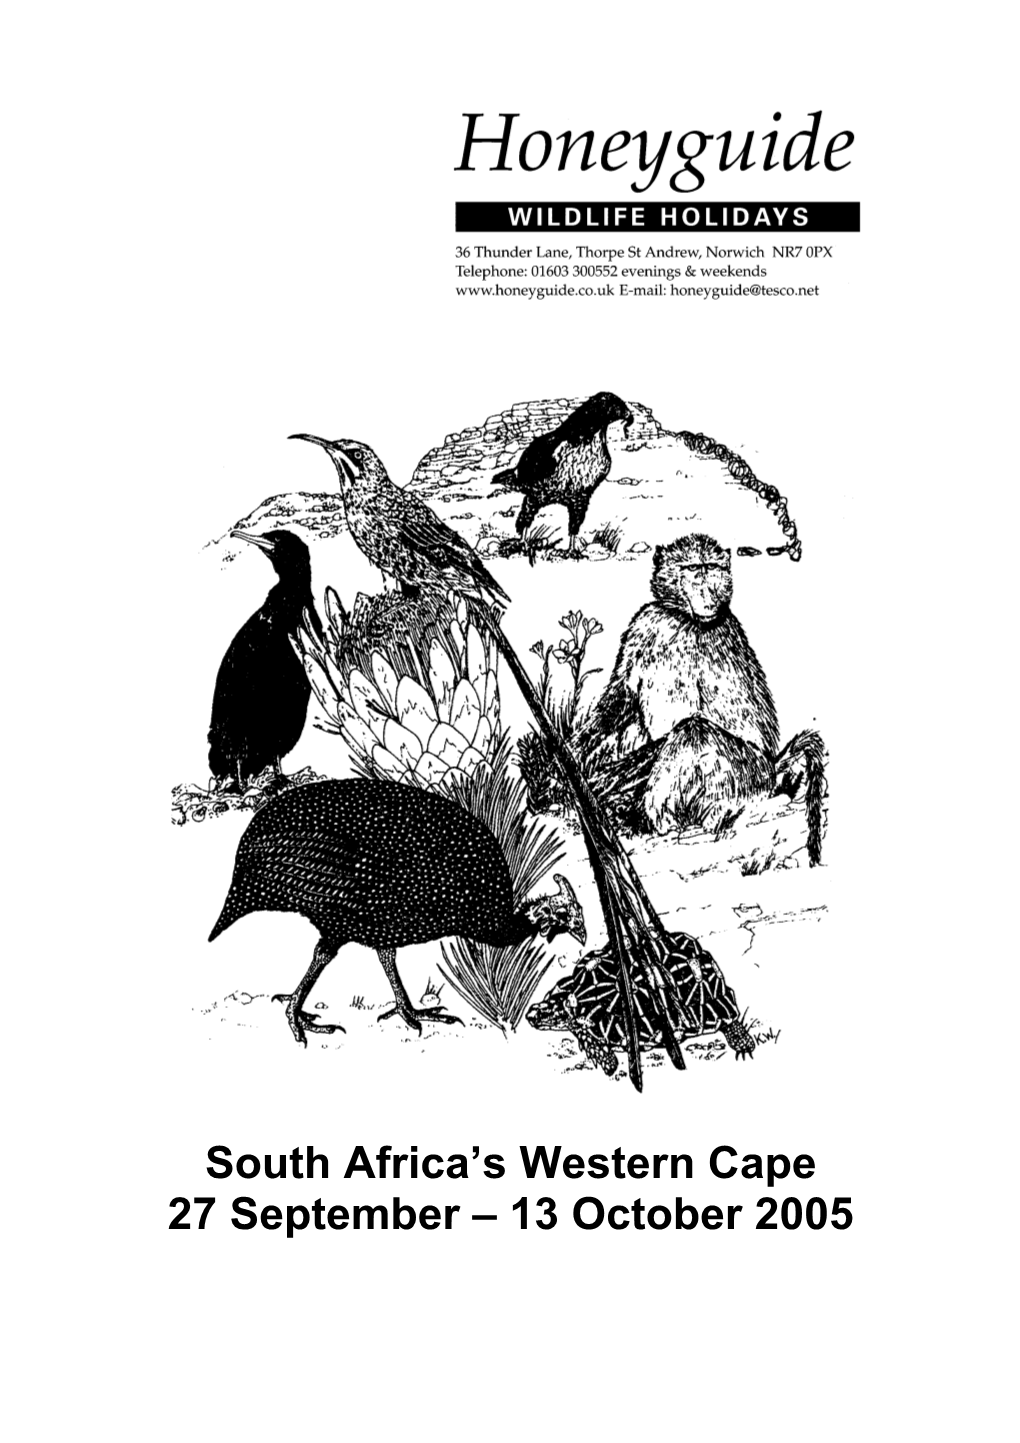 South Africa's Western Cape 27 September – 13 October 2005